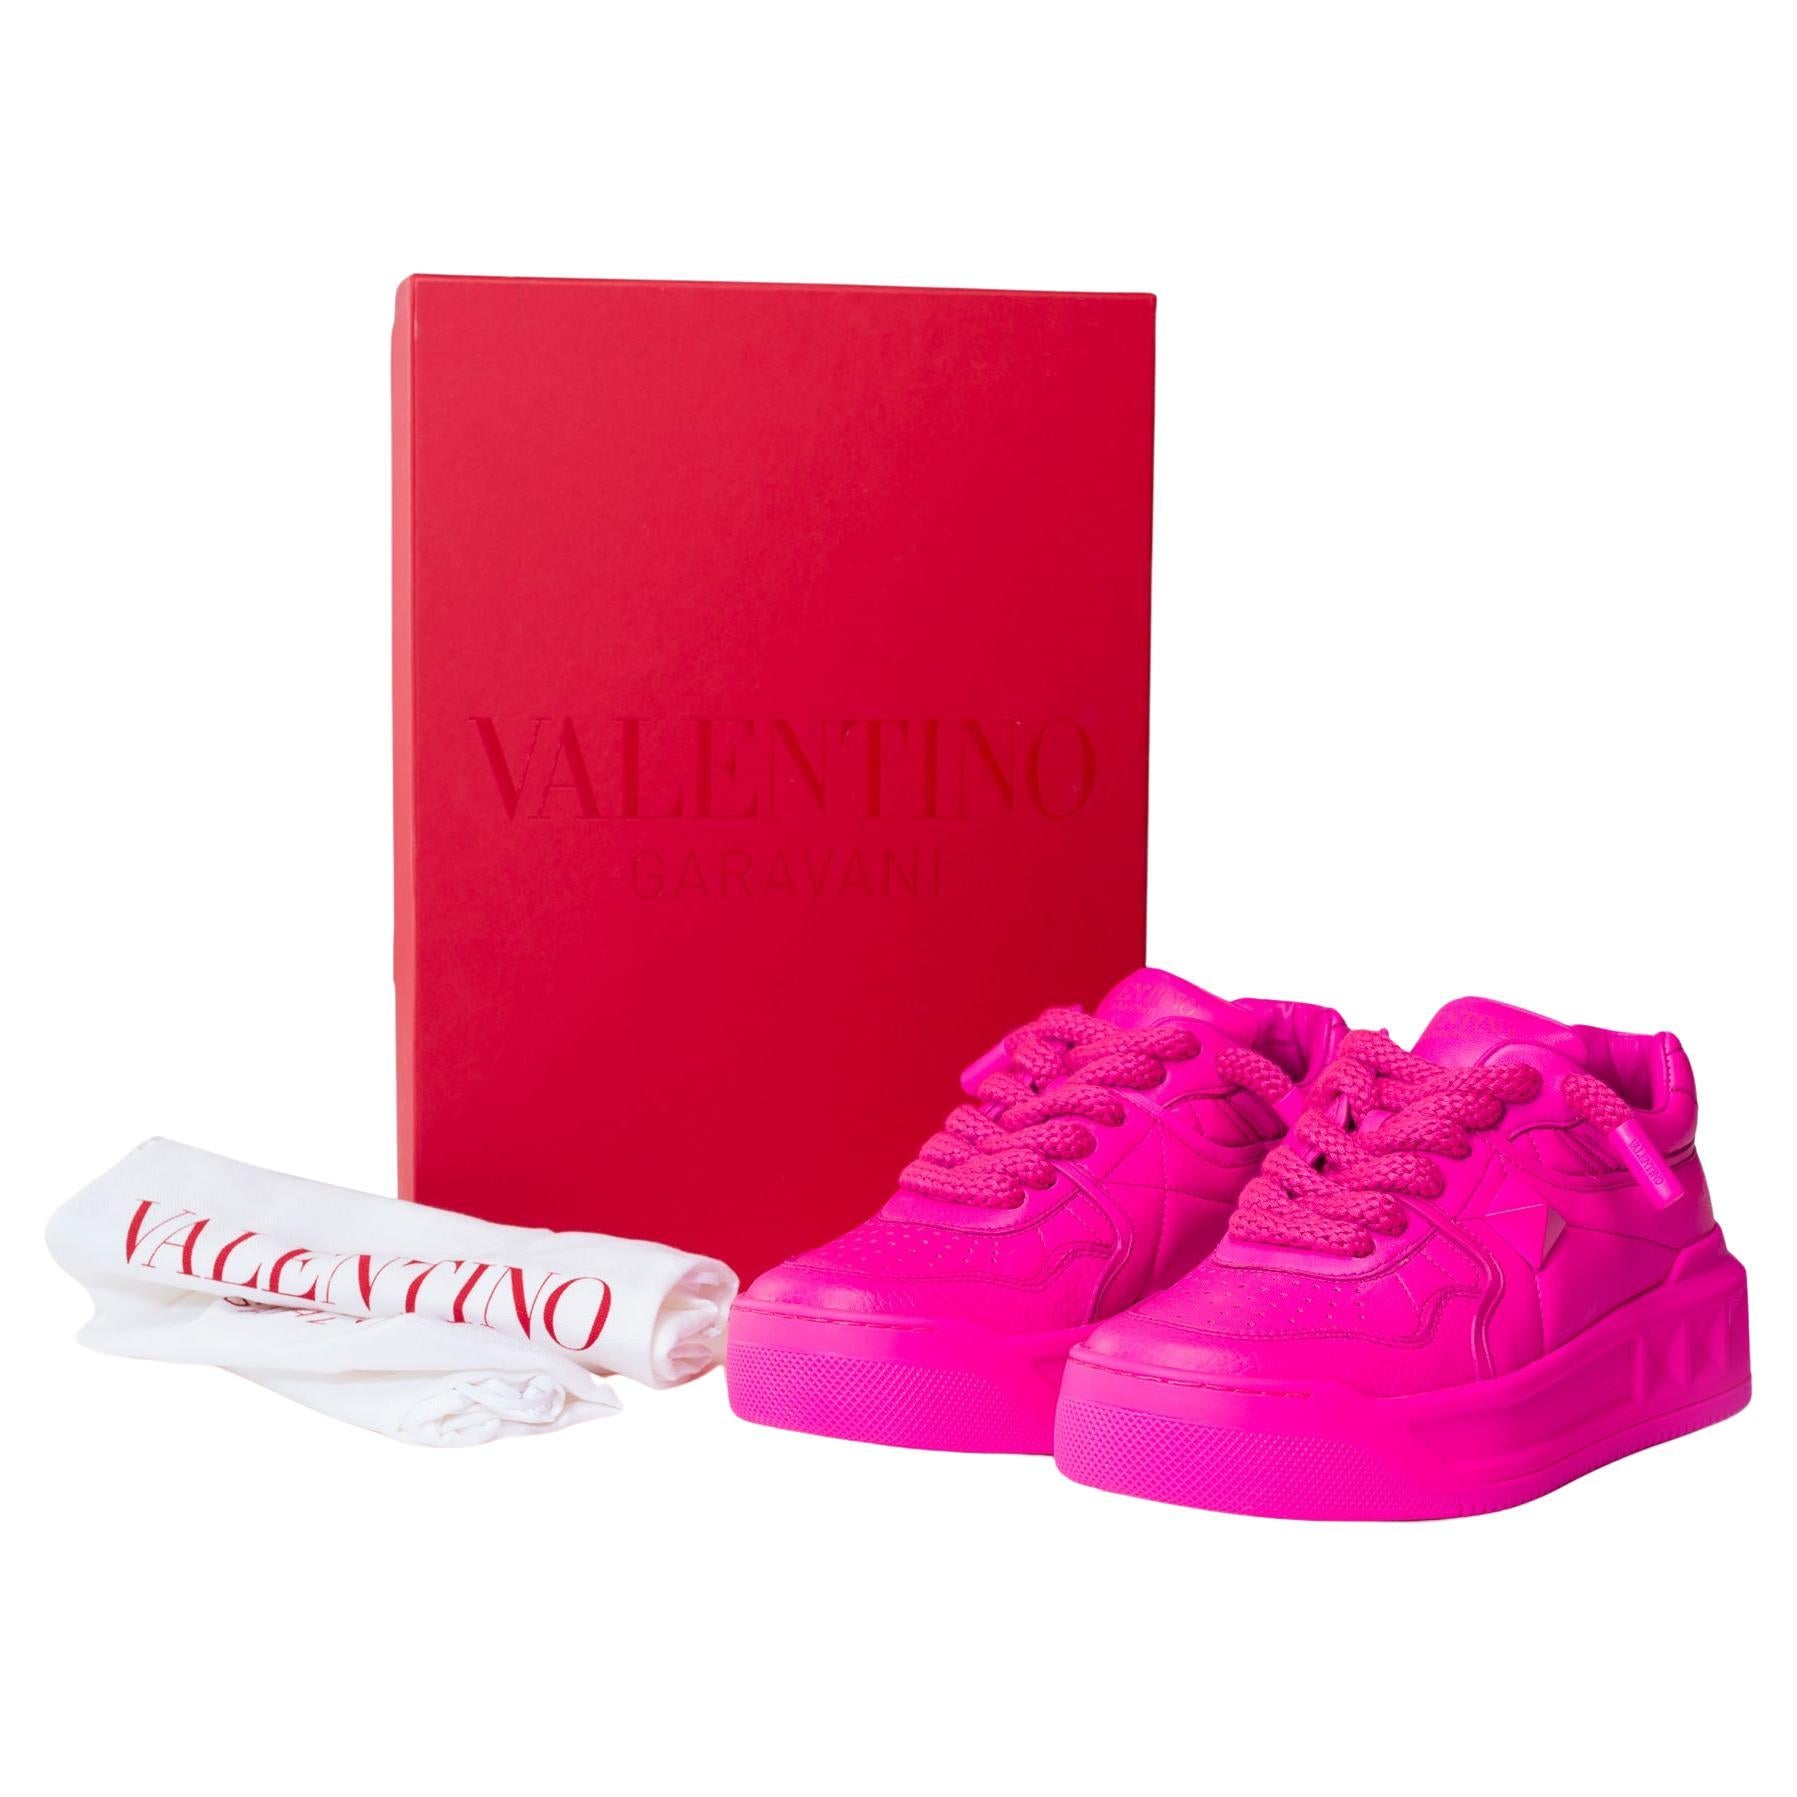 New Valentino Garavani ONE STUD XL Women Sneakers in Pink leather, Size 39